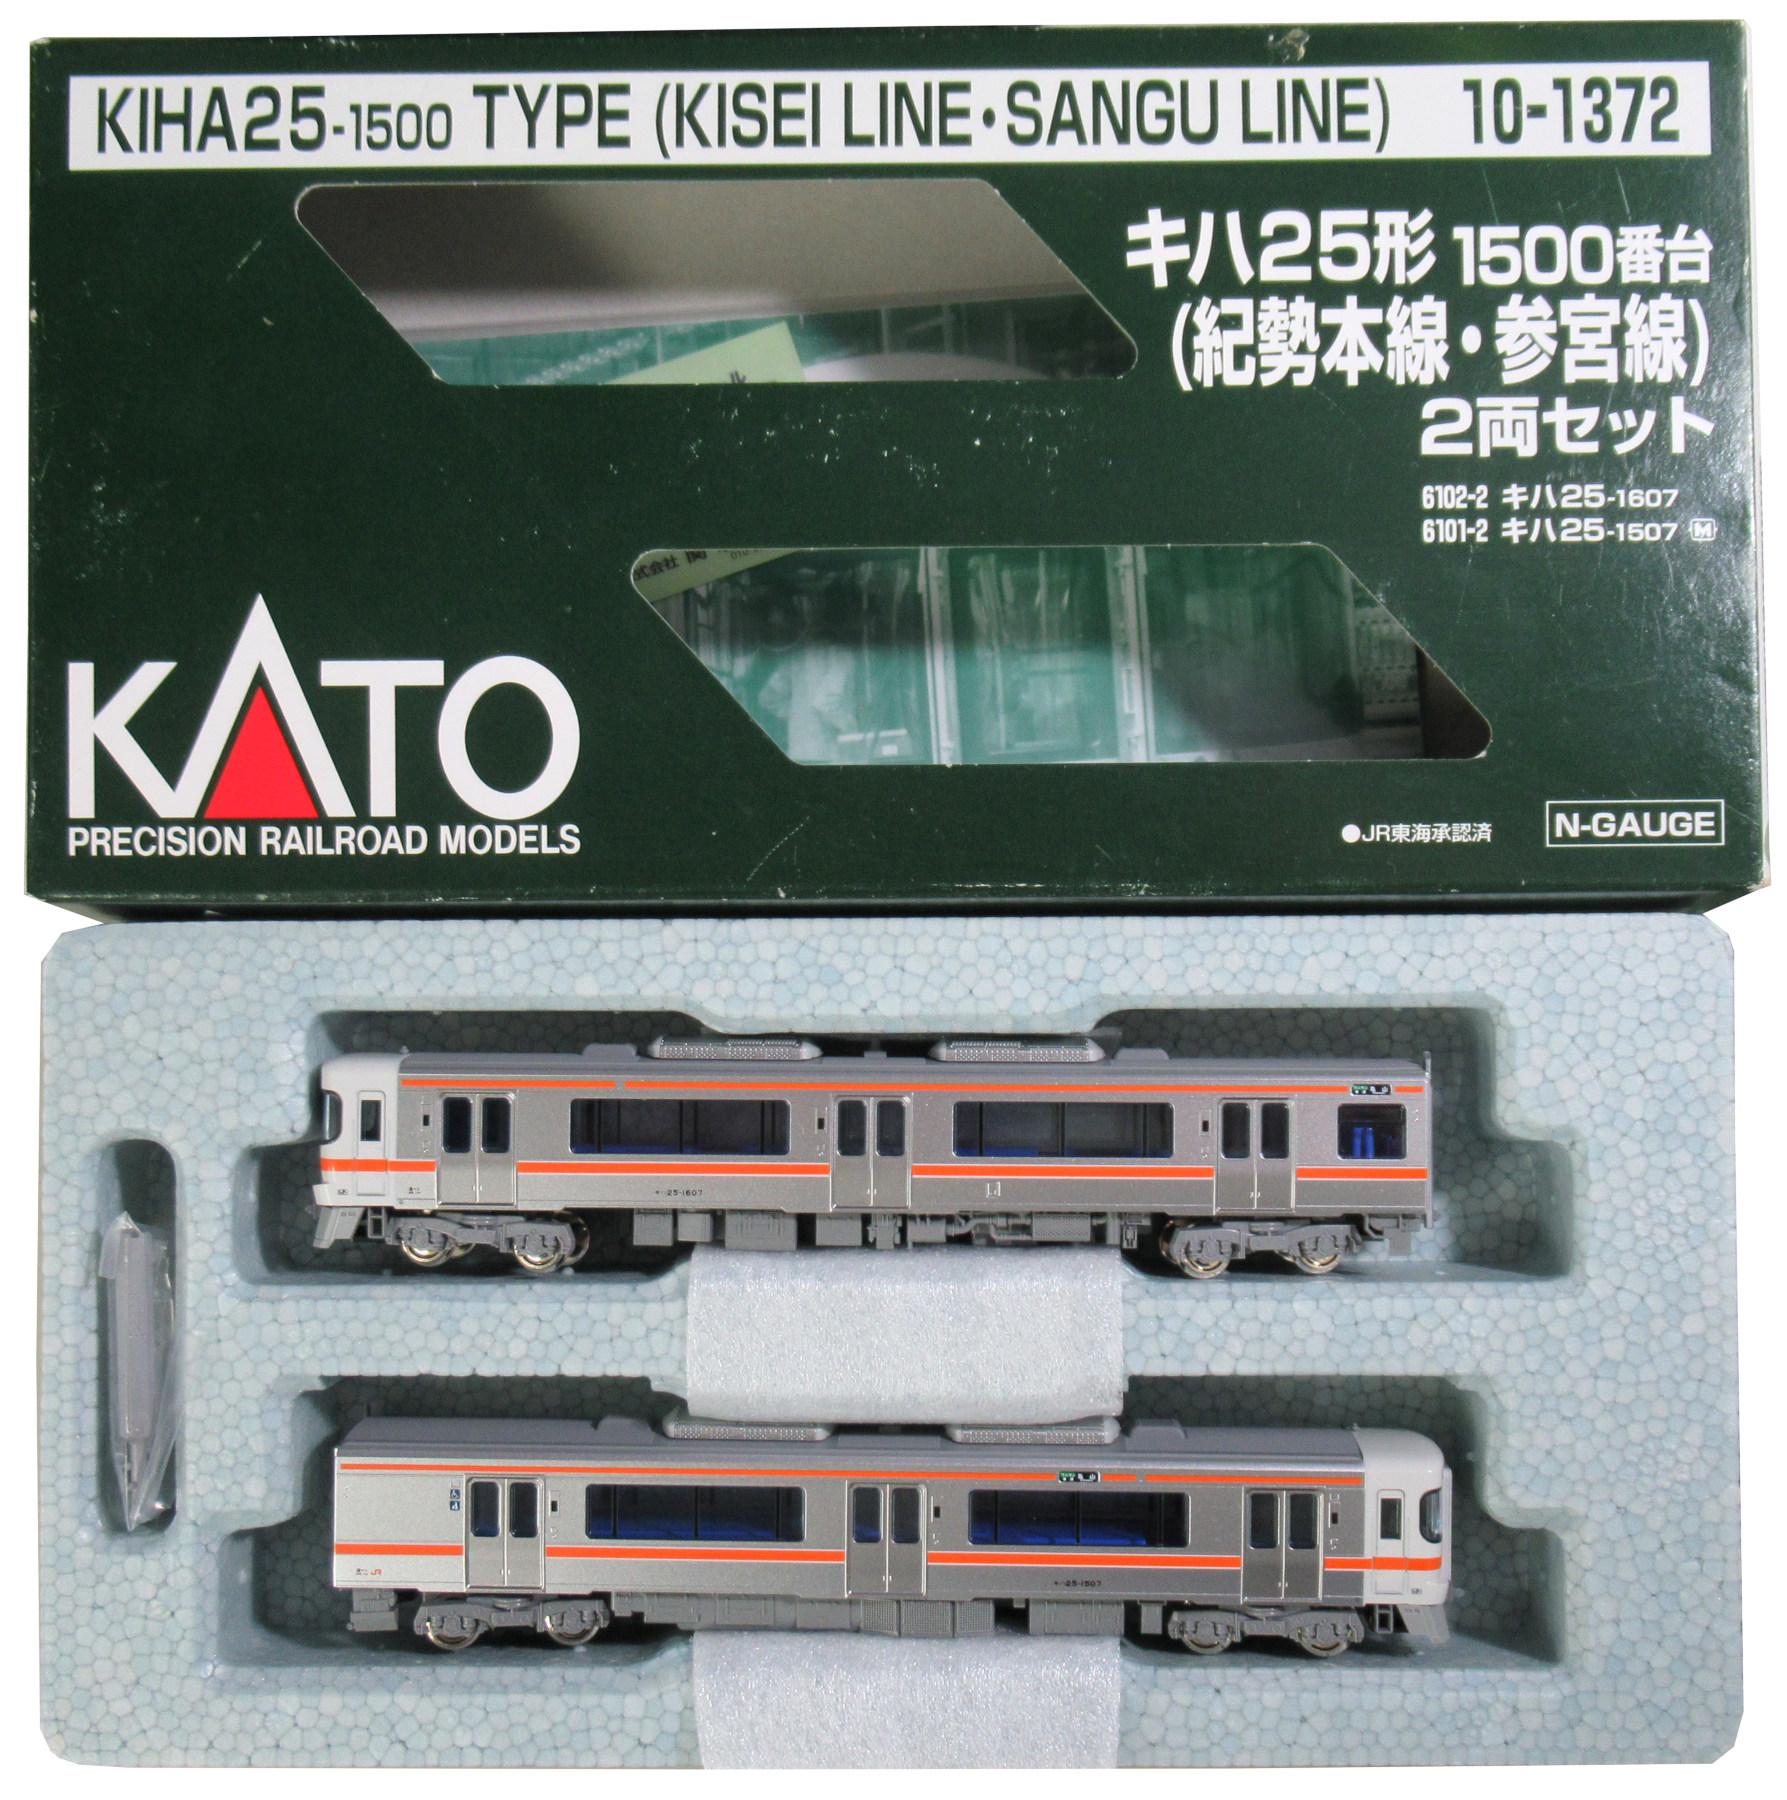 公式]鉄道模型(10-1372キハ25形1500番台 (紀勢本線・参宮線) 2両セット 